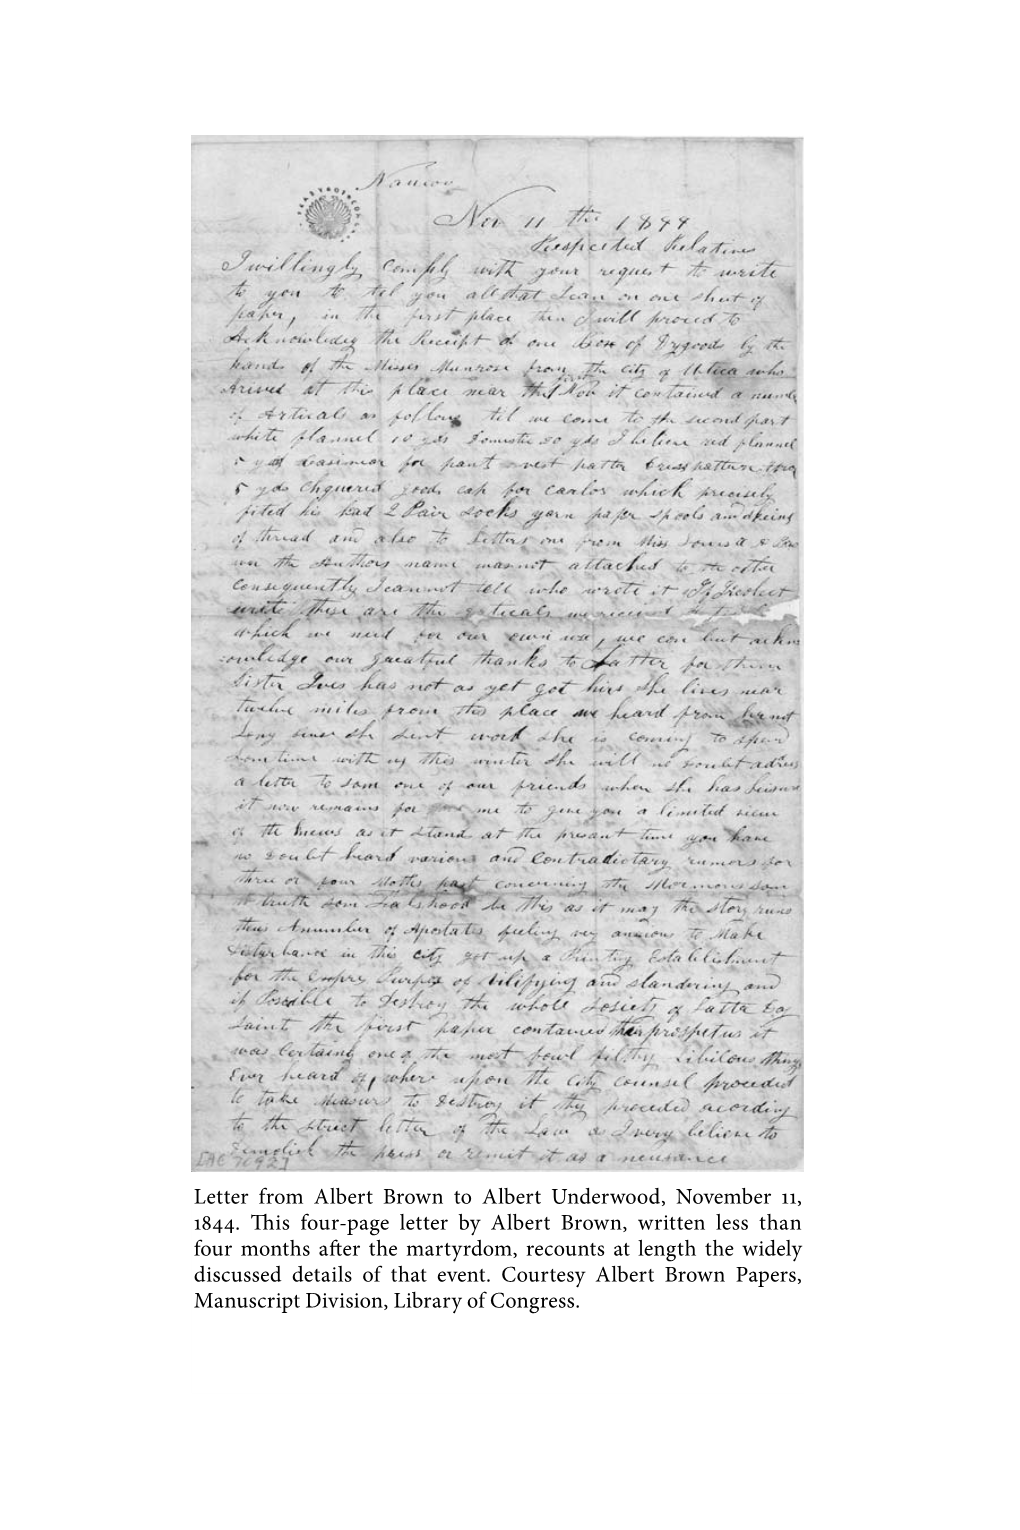 Letter from Albert Brown to Albert Underwood, November 11, 1844